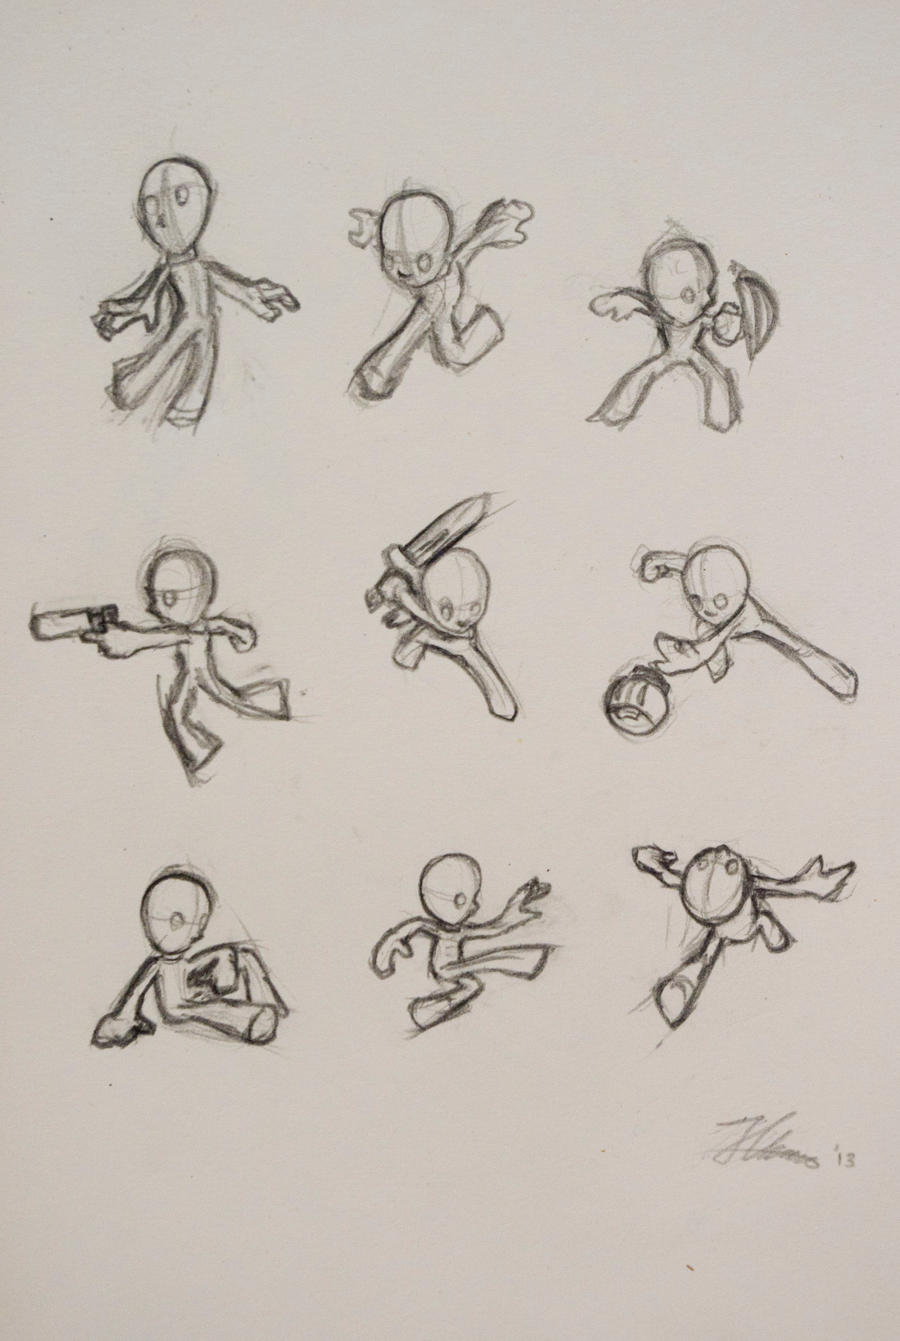 Spiral Knights - Action Pose Sketch